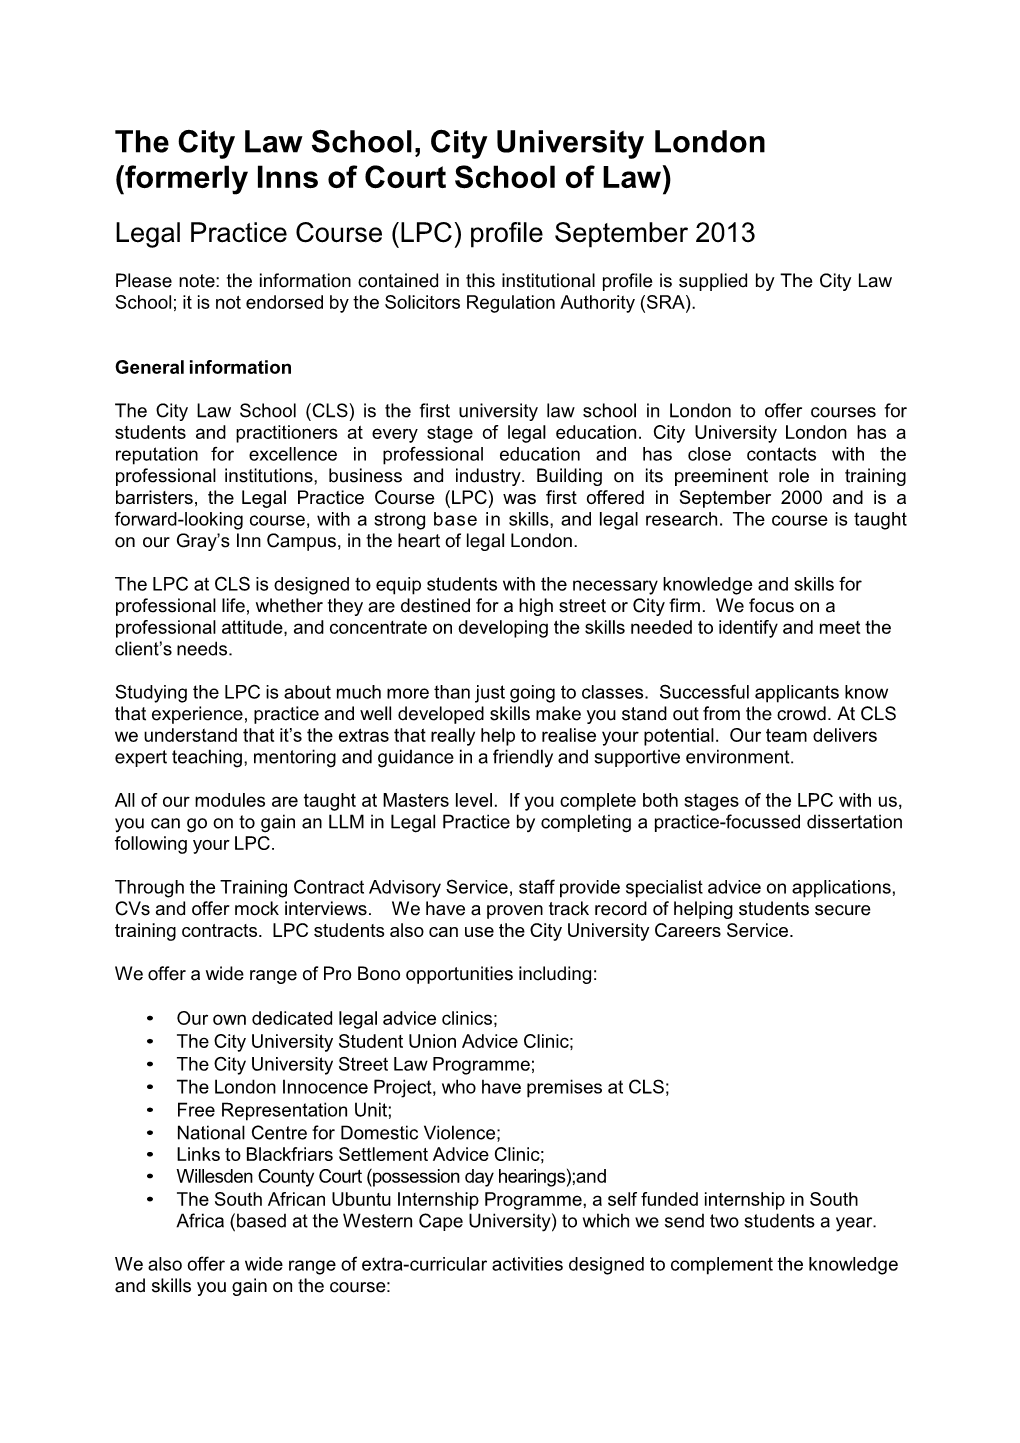 The City Law School, City University, London LPC Profile